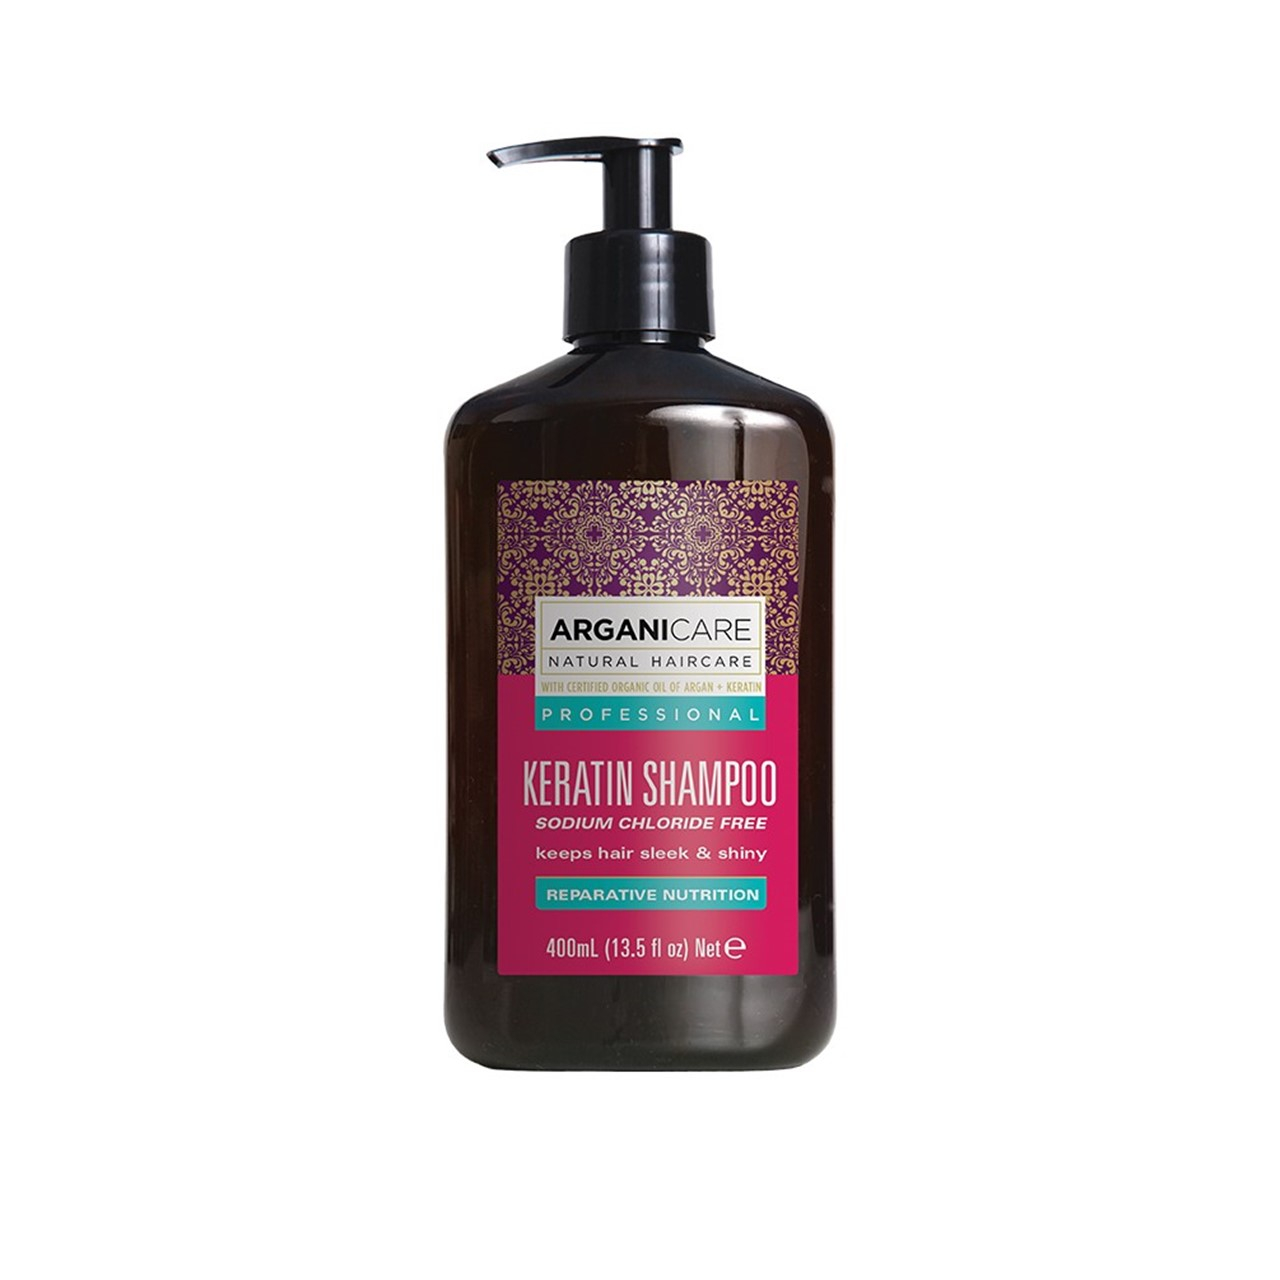 Arganicare Keratin Shampoo 400ml (13.5 fl oz)